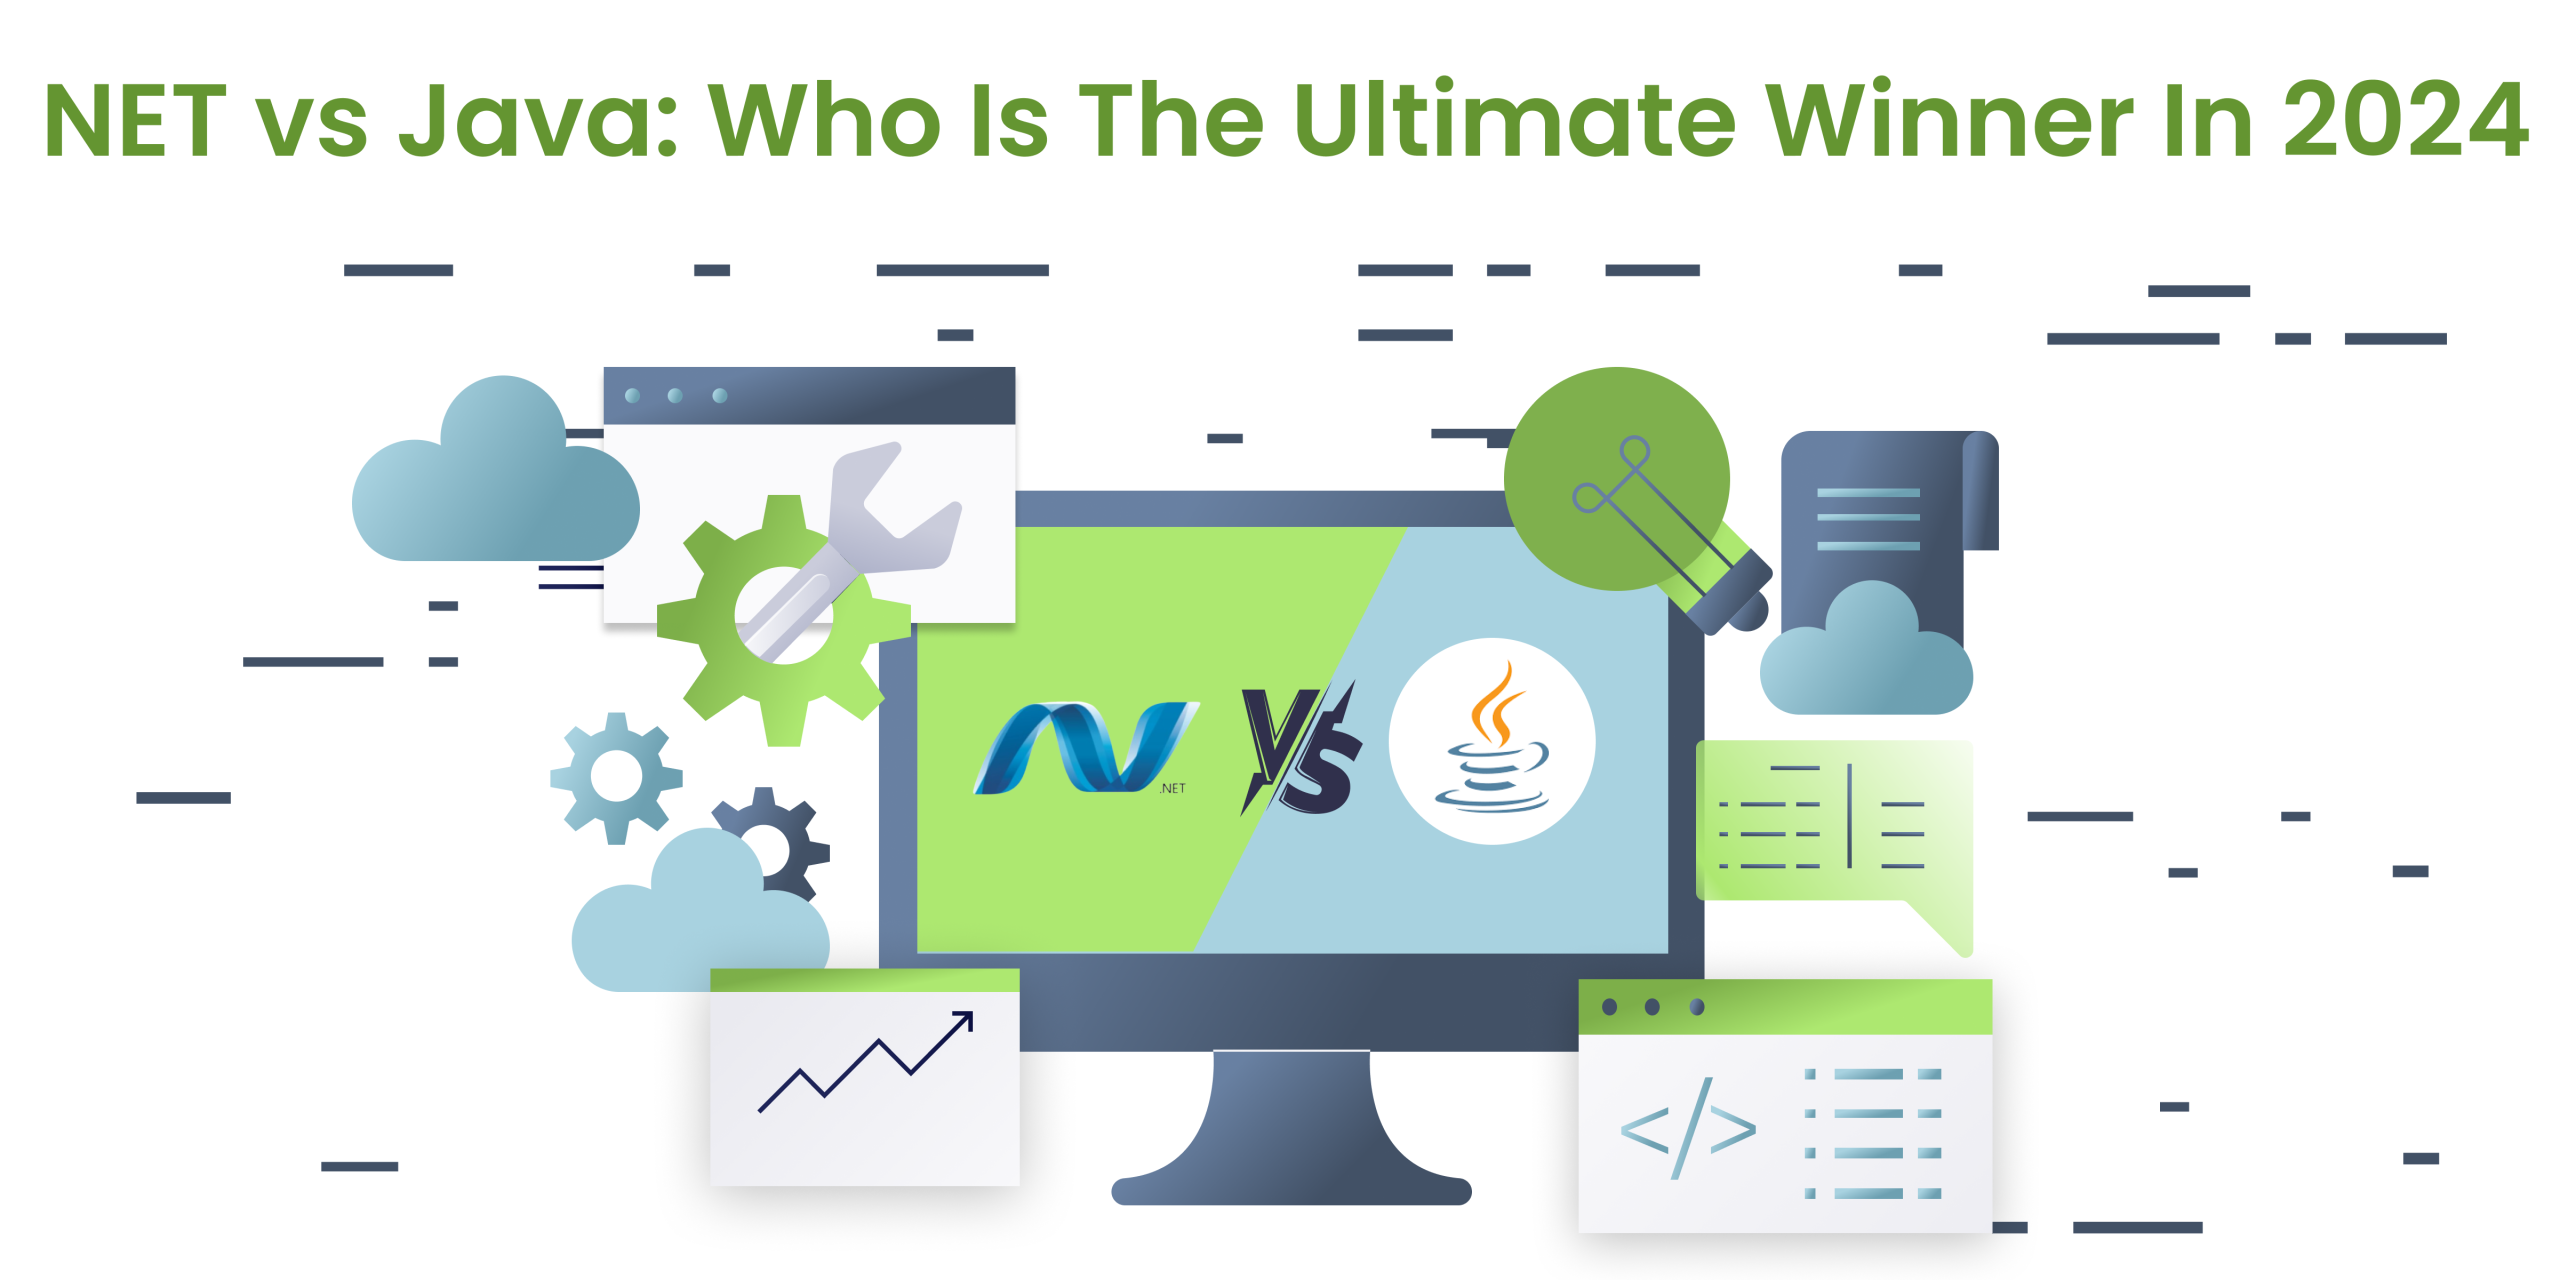 NET vs Java Who Is The Ultimate Winner In